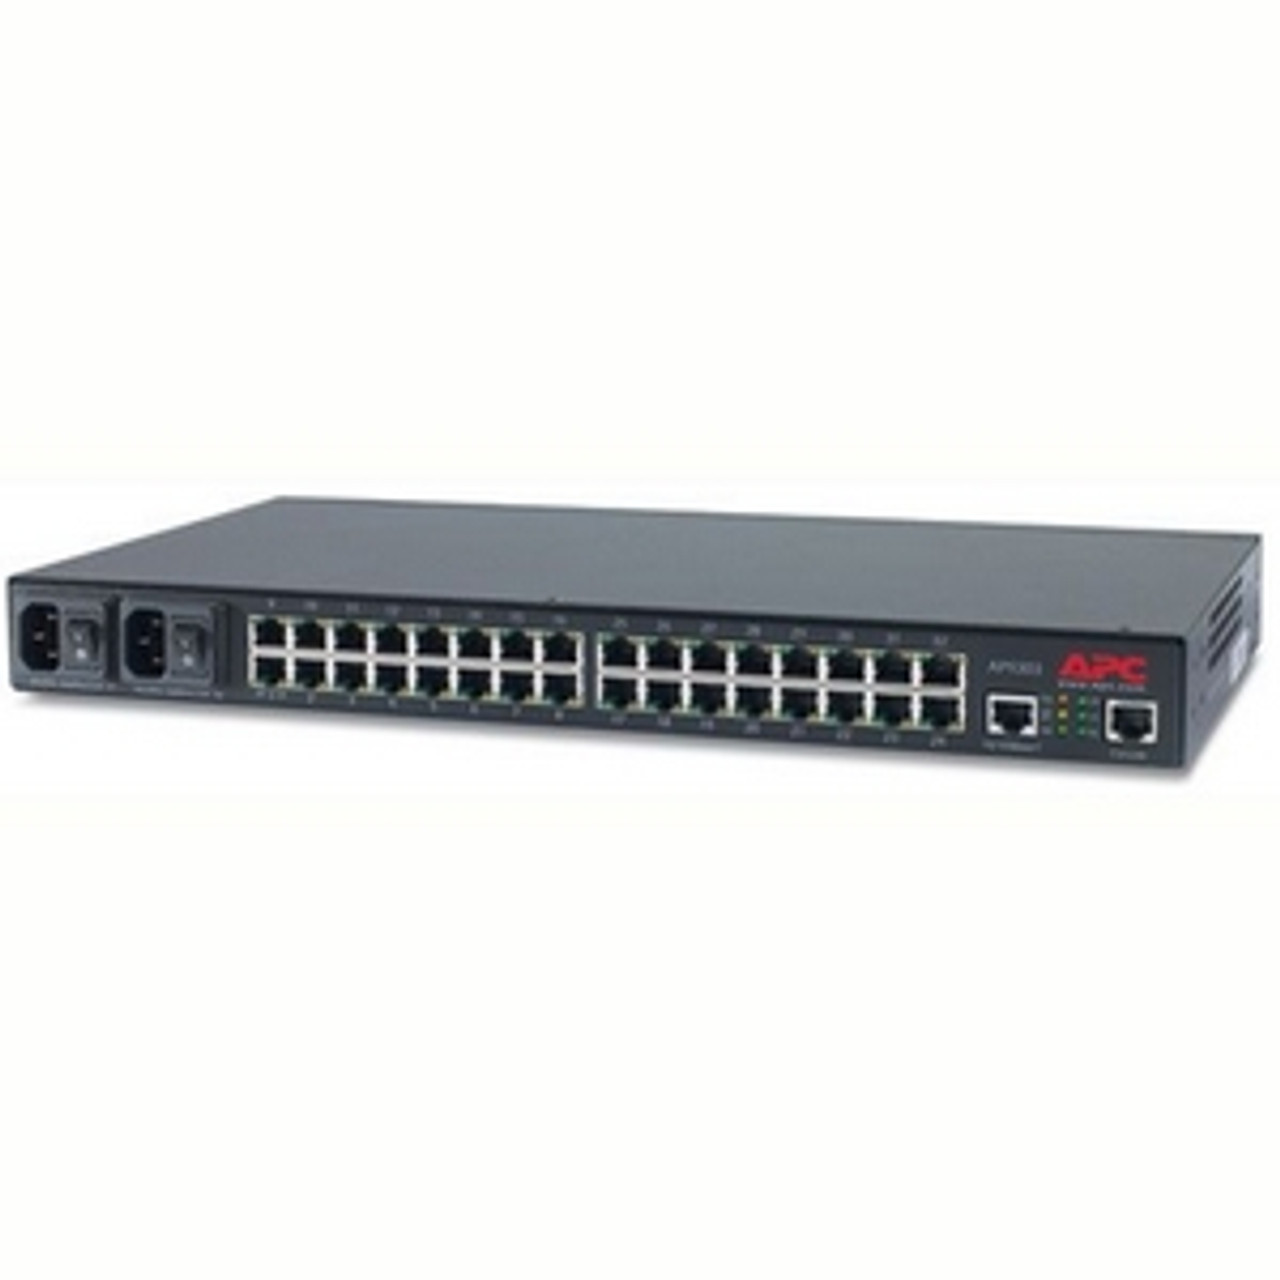 AP9303 APC 32-Port Console Server 32 x RJ-45 , 1 x RJ-45 10/100Base-TX (Refurbished)